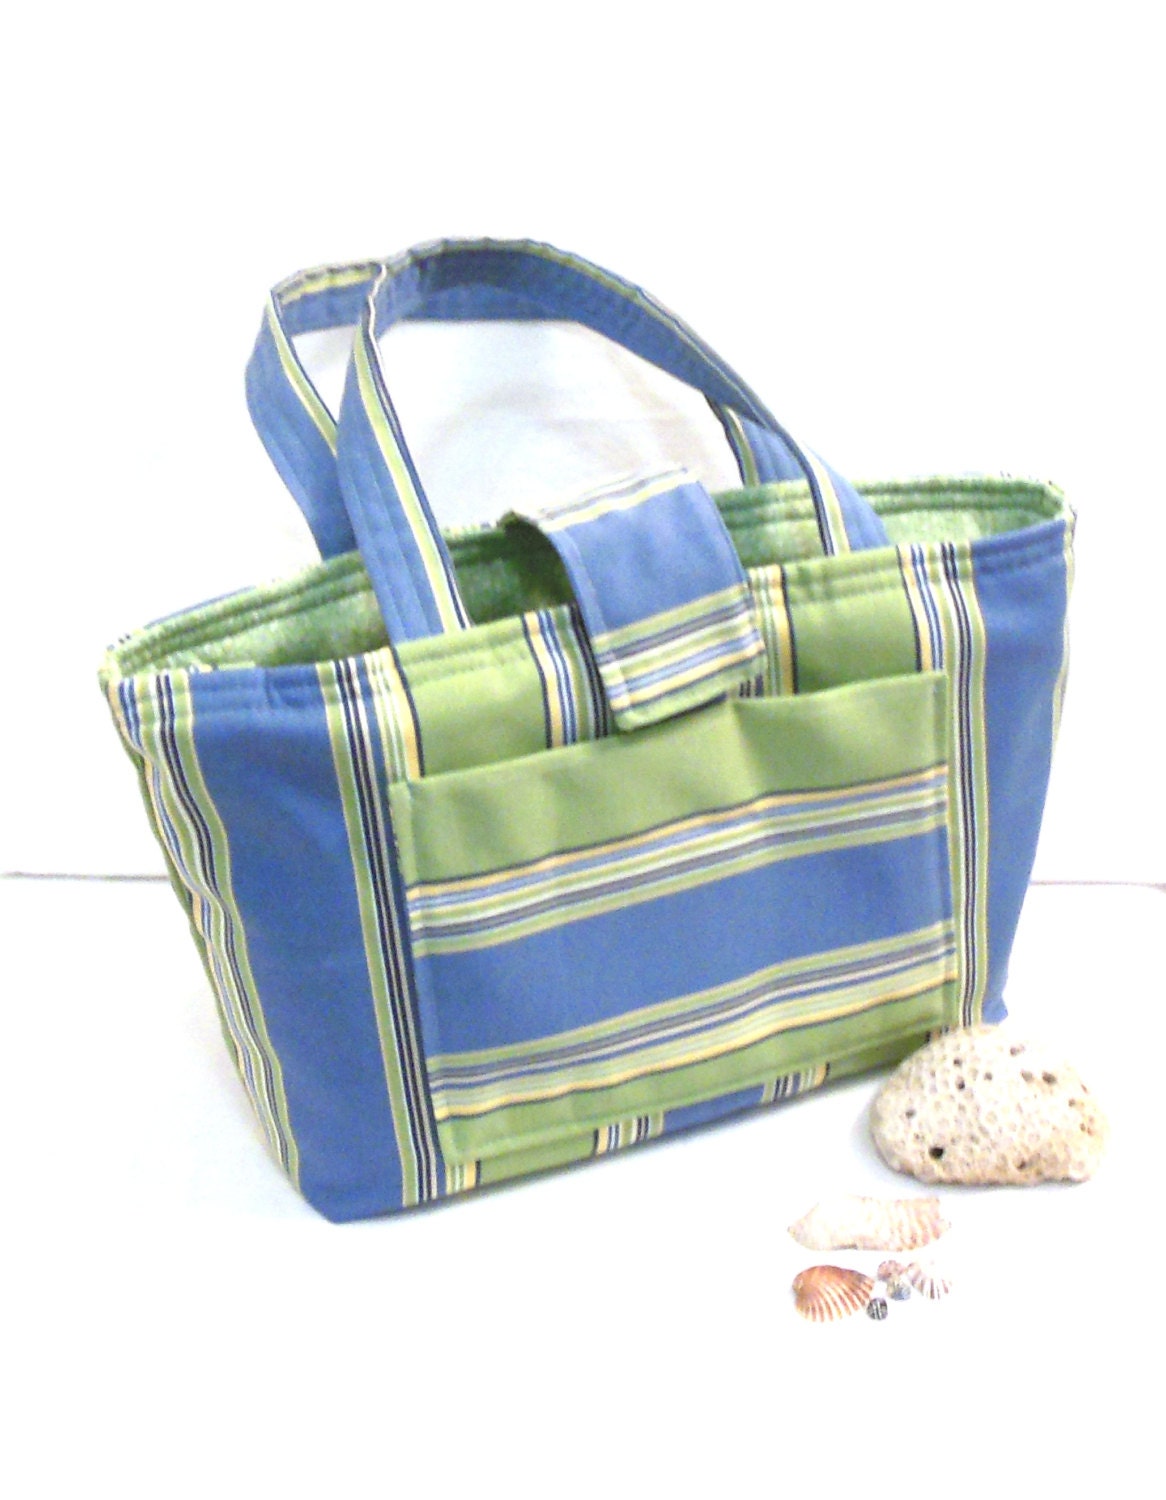 Beach bag pockets large tote beach bag blue and green